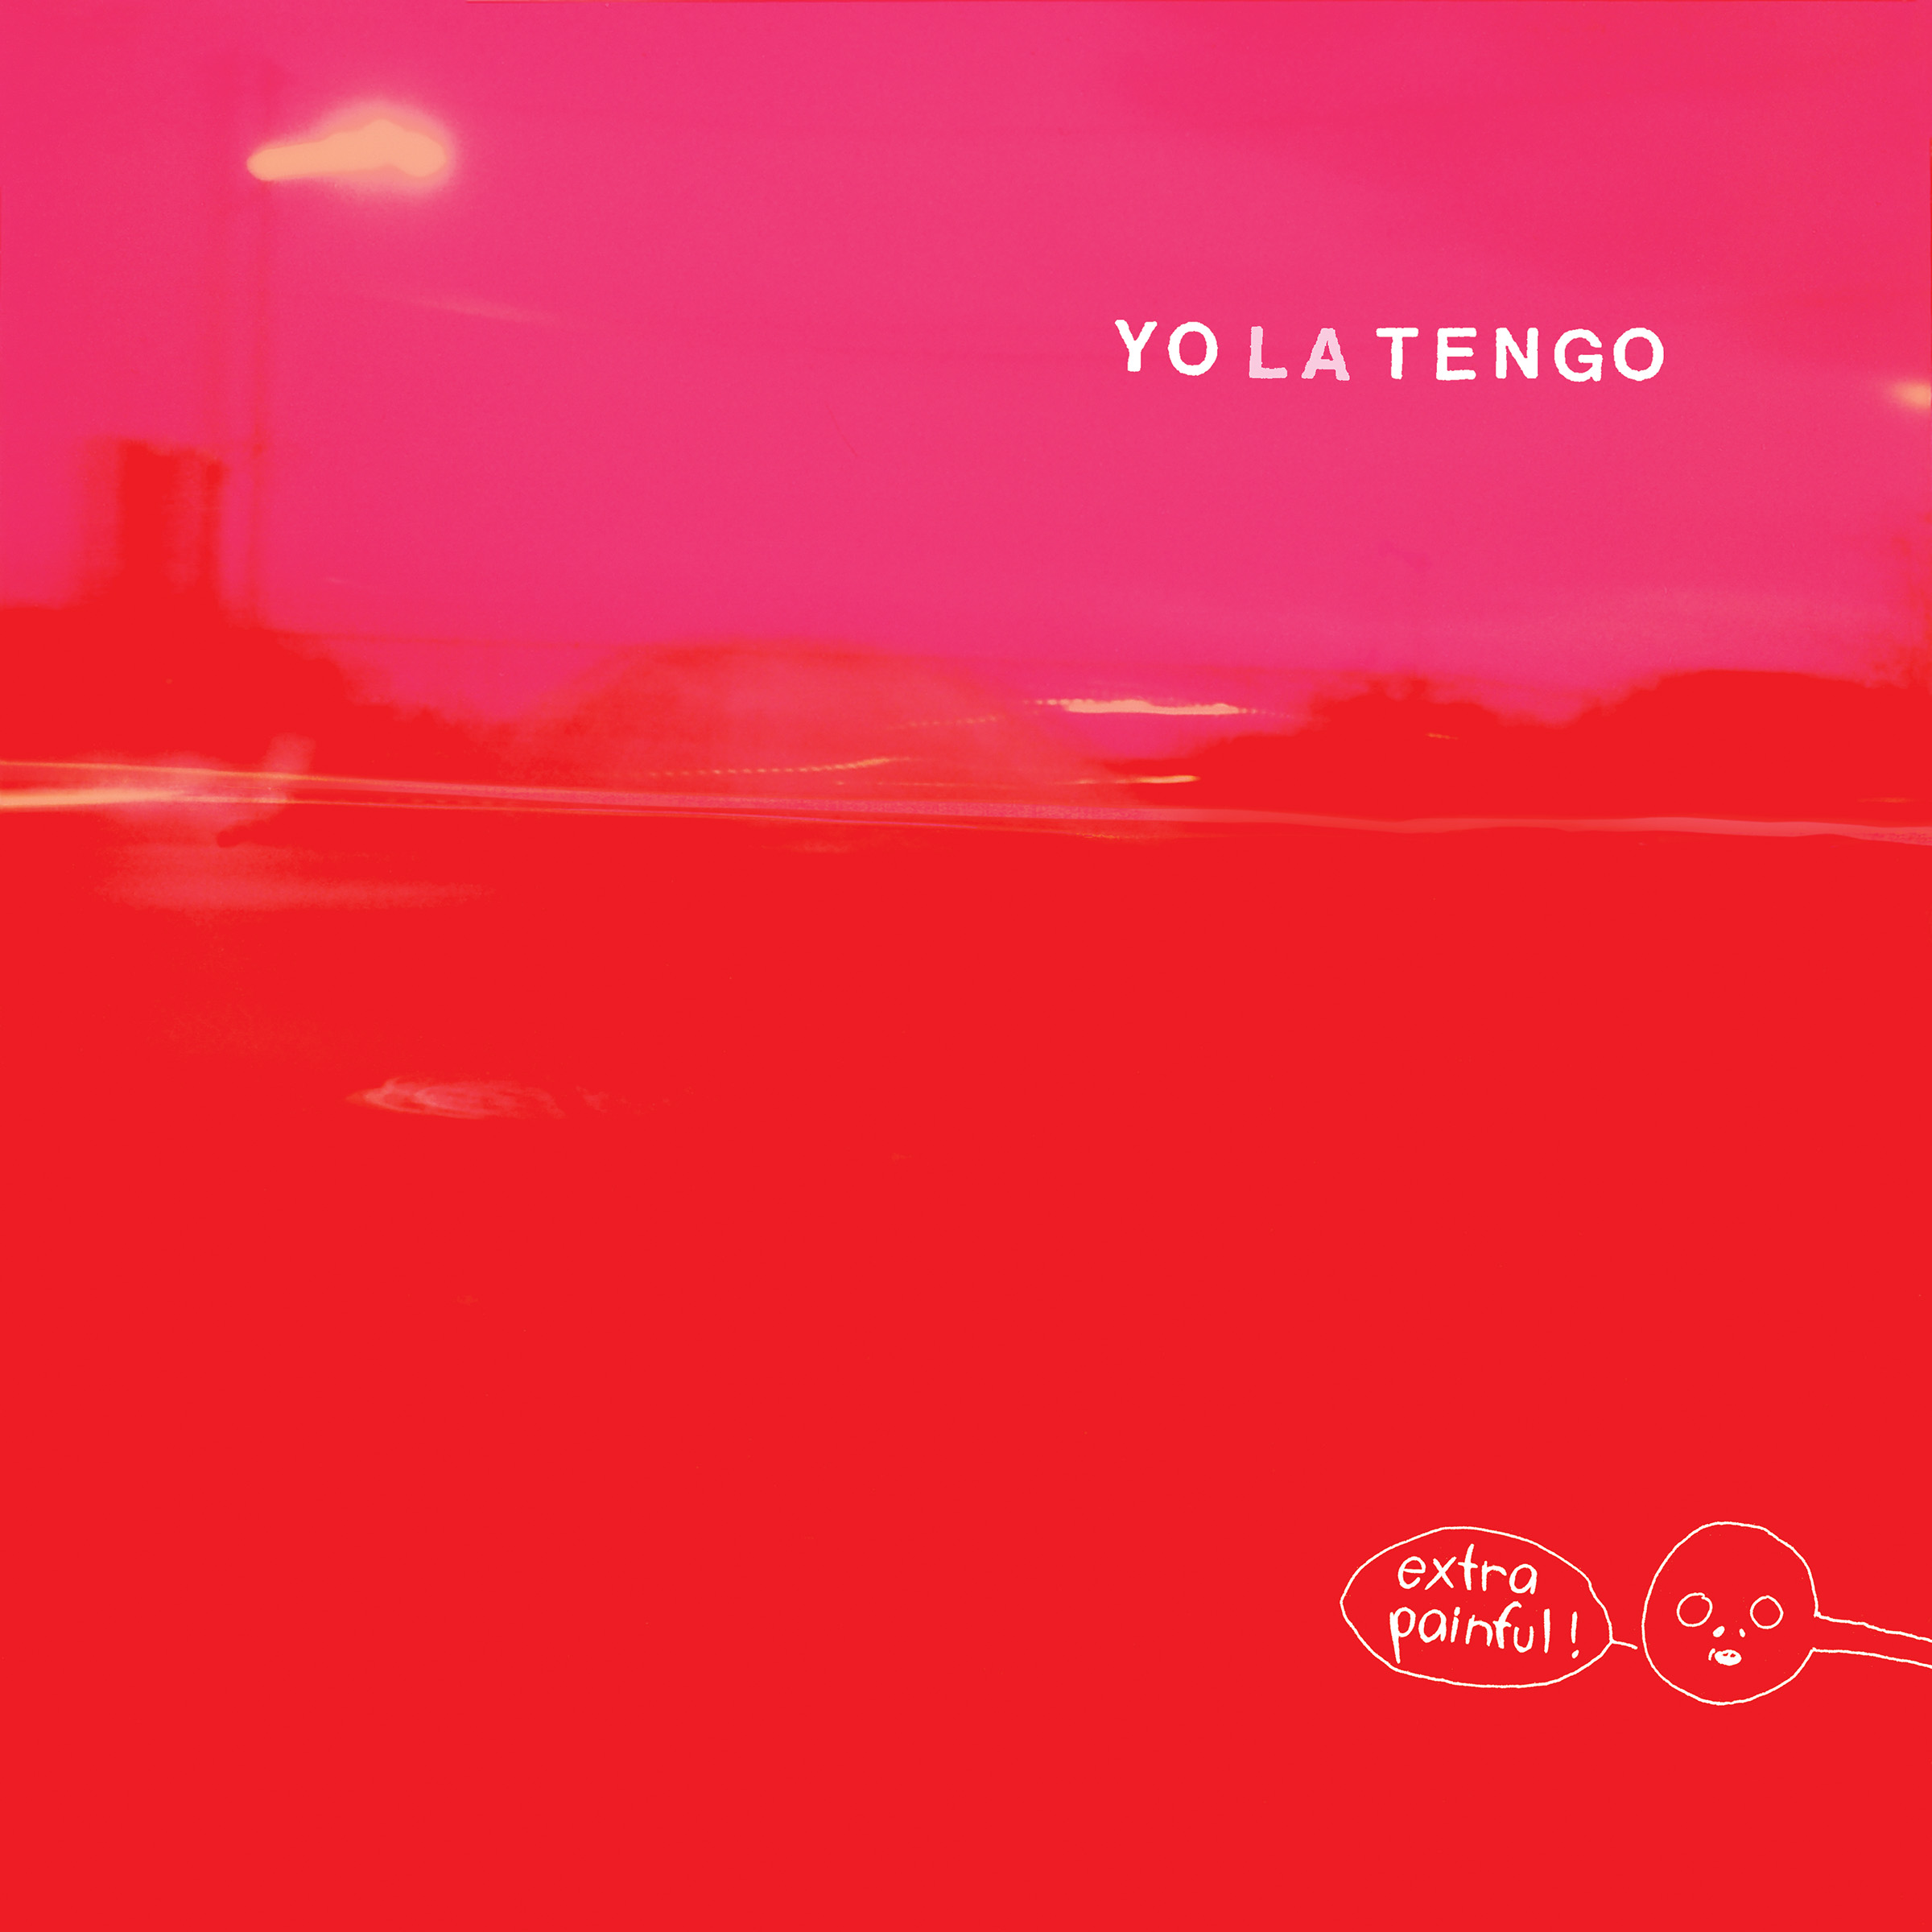 Yo La Tengo - Extra Painful (Reissue) - 2xCD